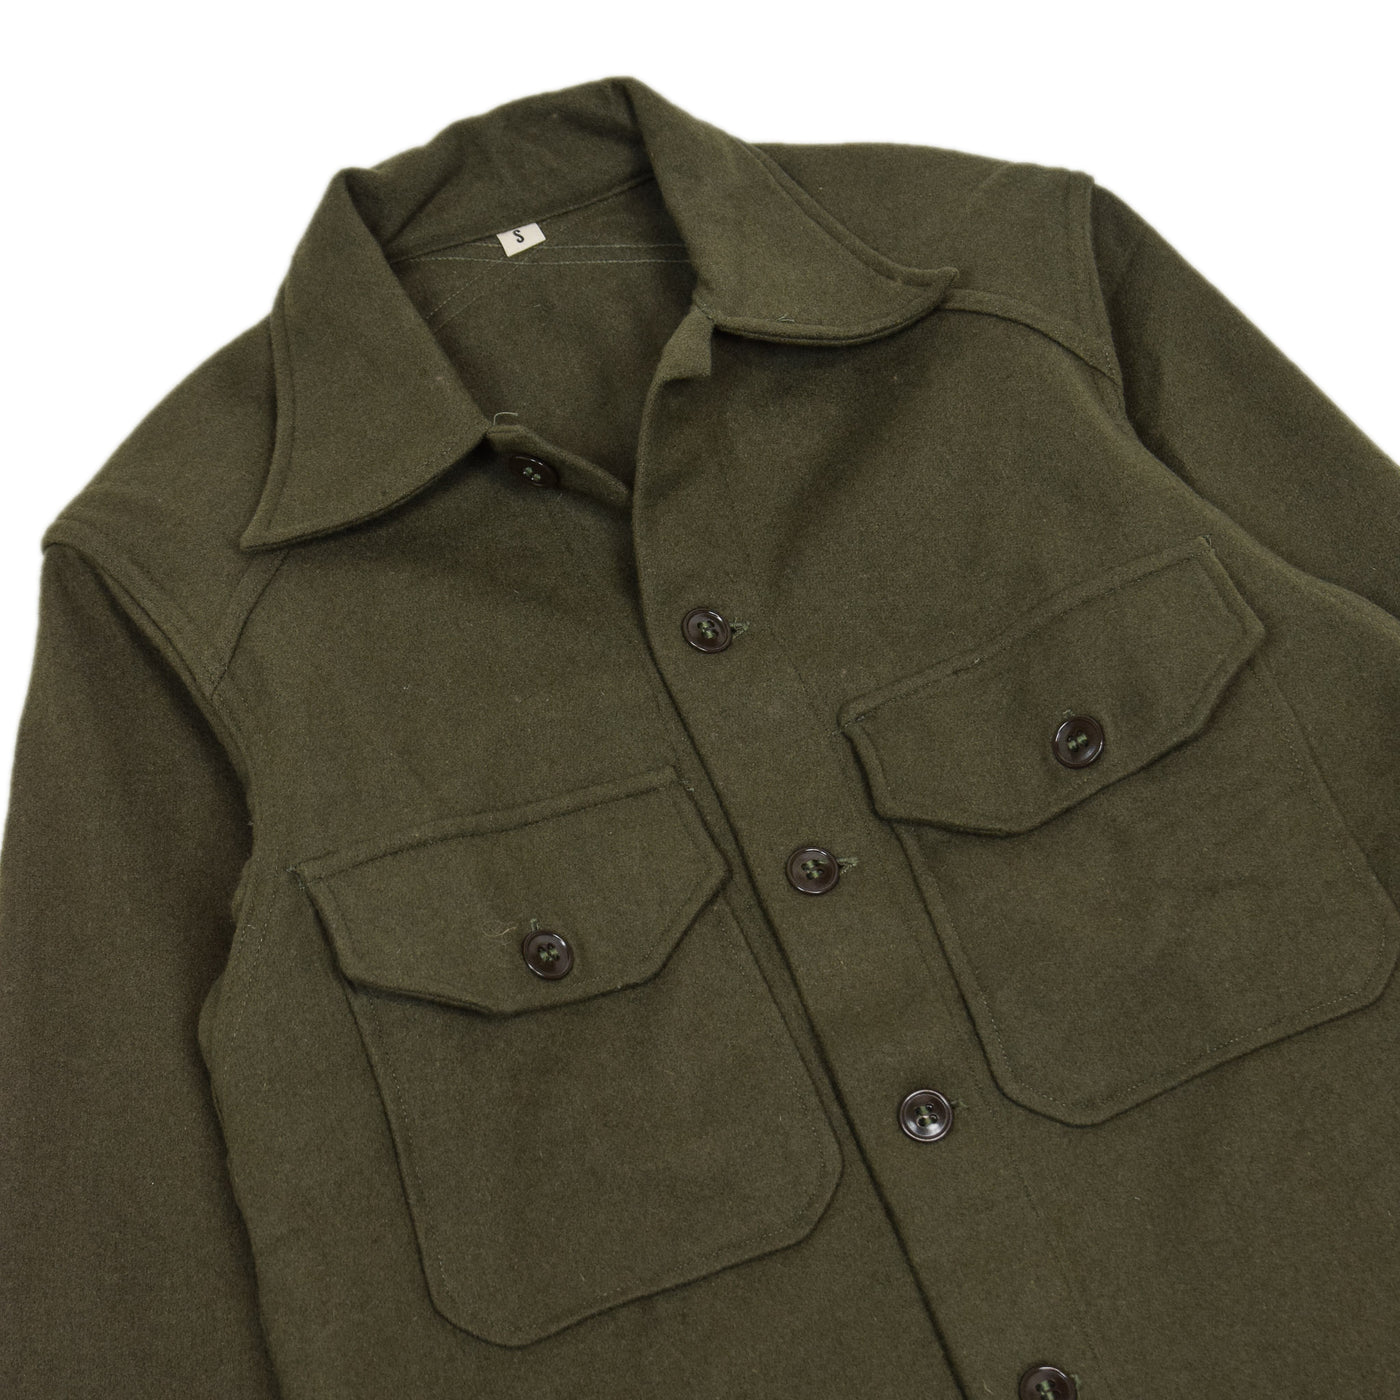 Vintage Deadstock 50s Korean War Era OG-108 US Army Wool Field Shirt S CHEST